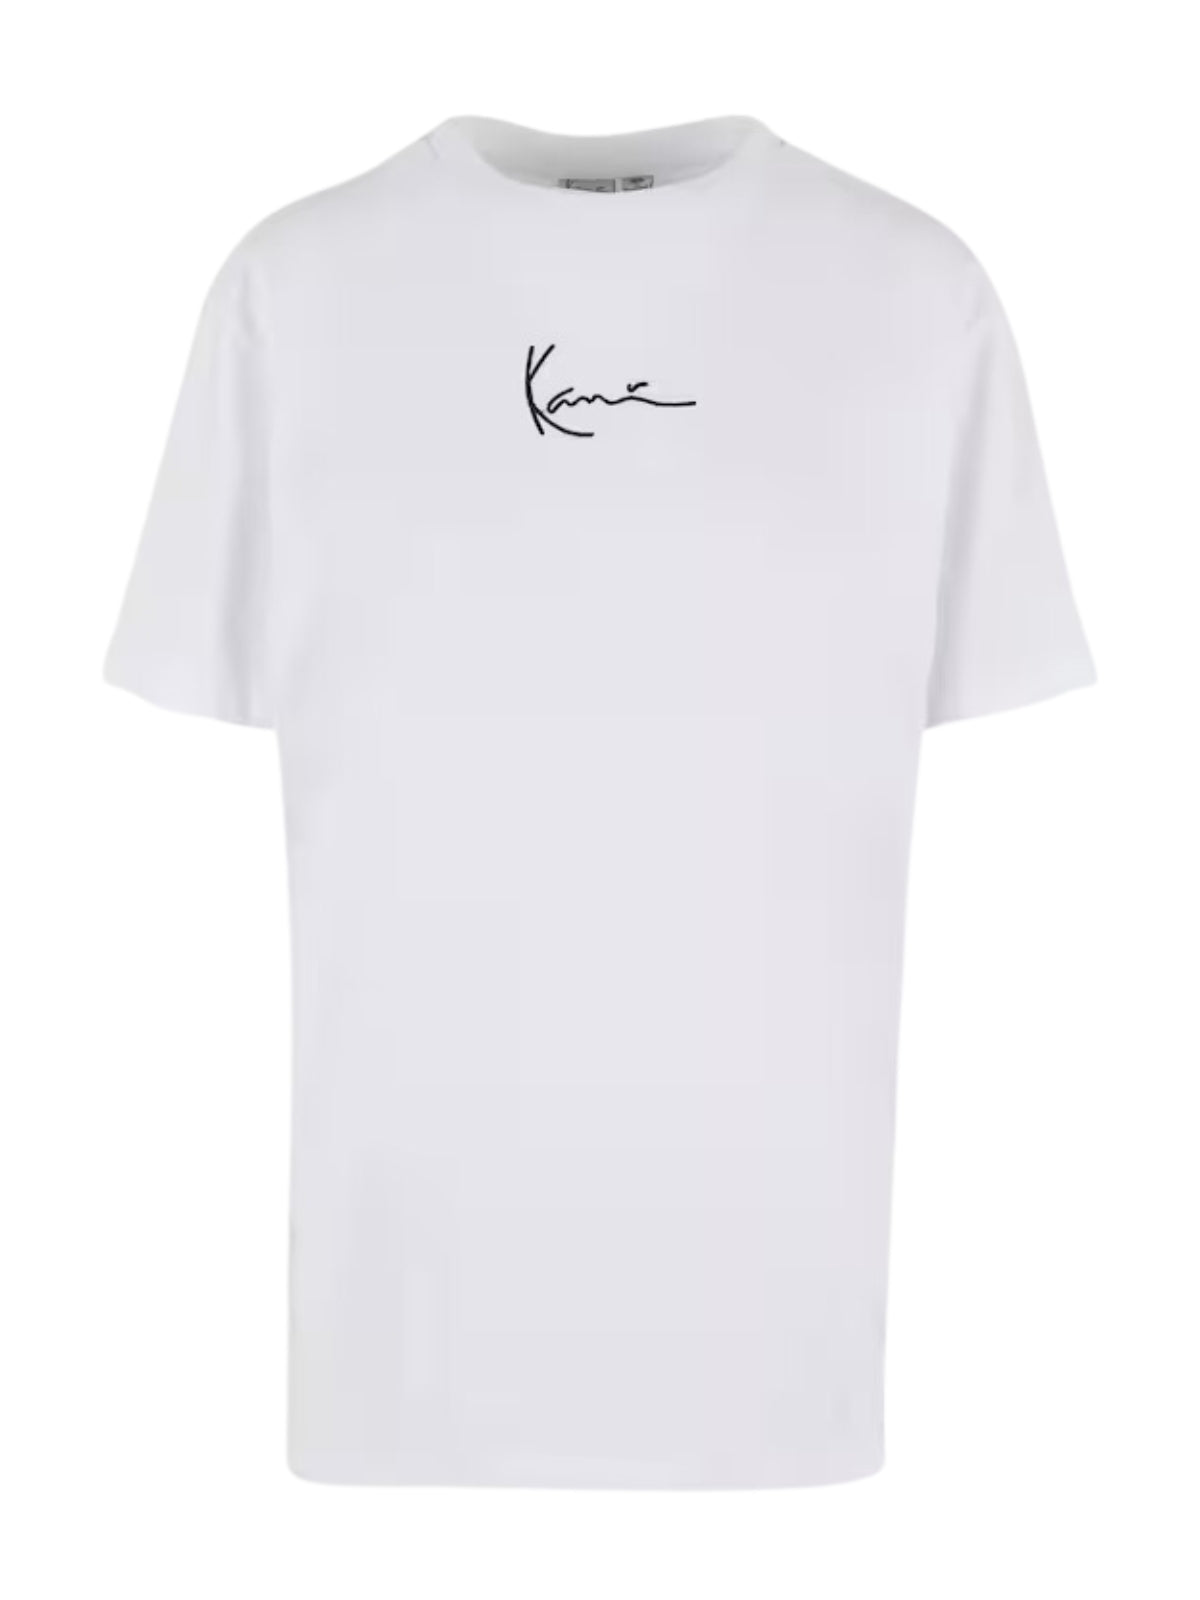 Karl Kani T-Shirt Small Signature White